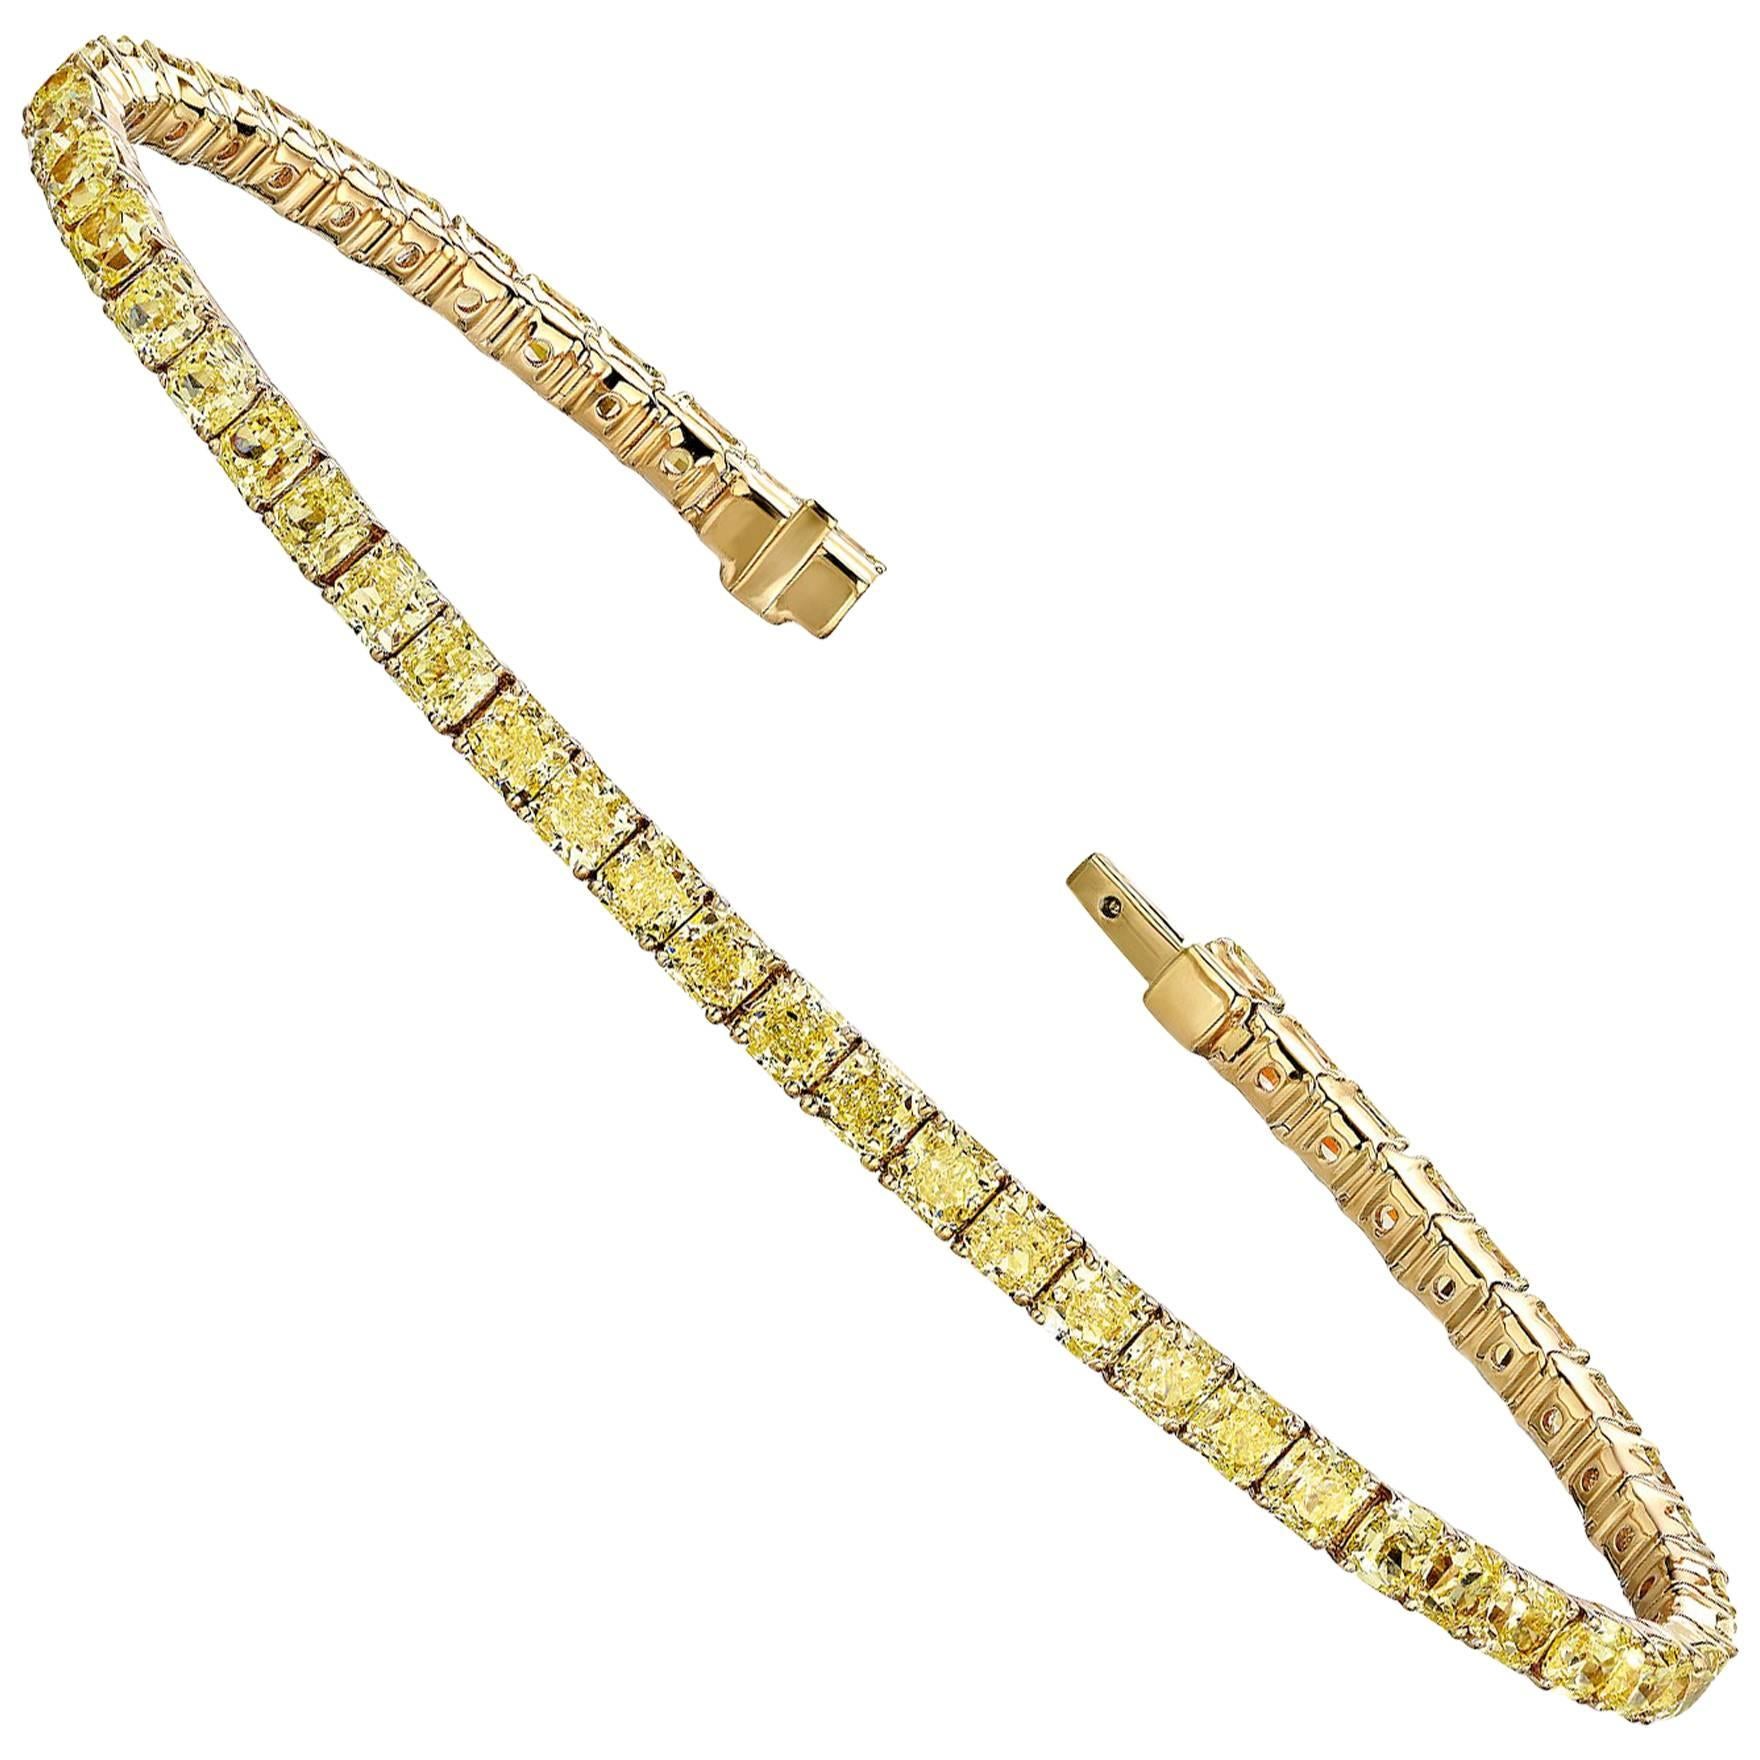 10.50 Carat Fancy Intense Radiant Yellow Diamond Bracelet